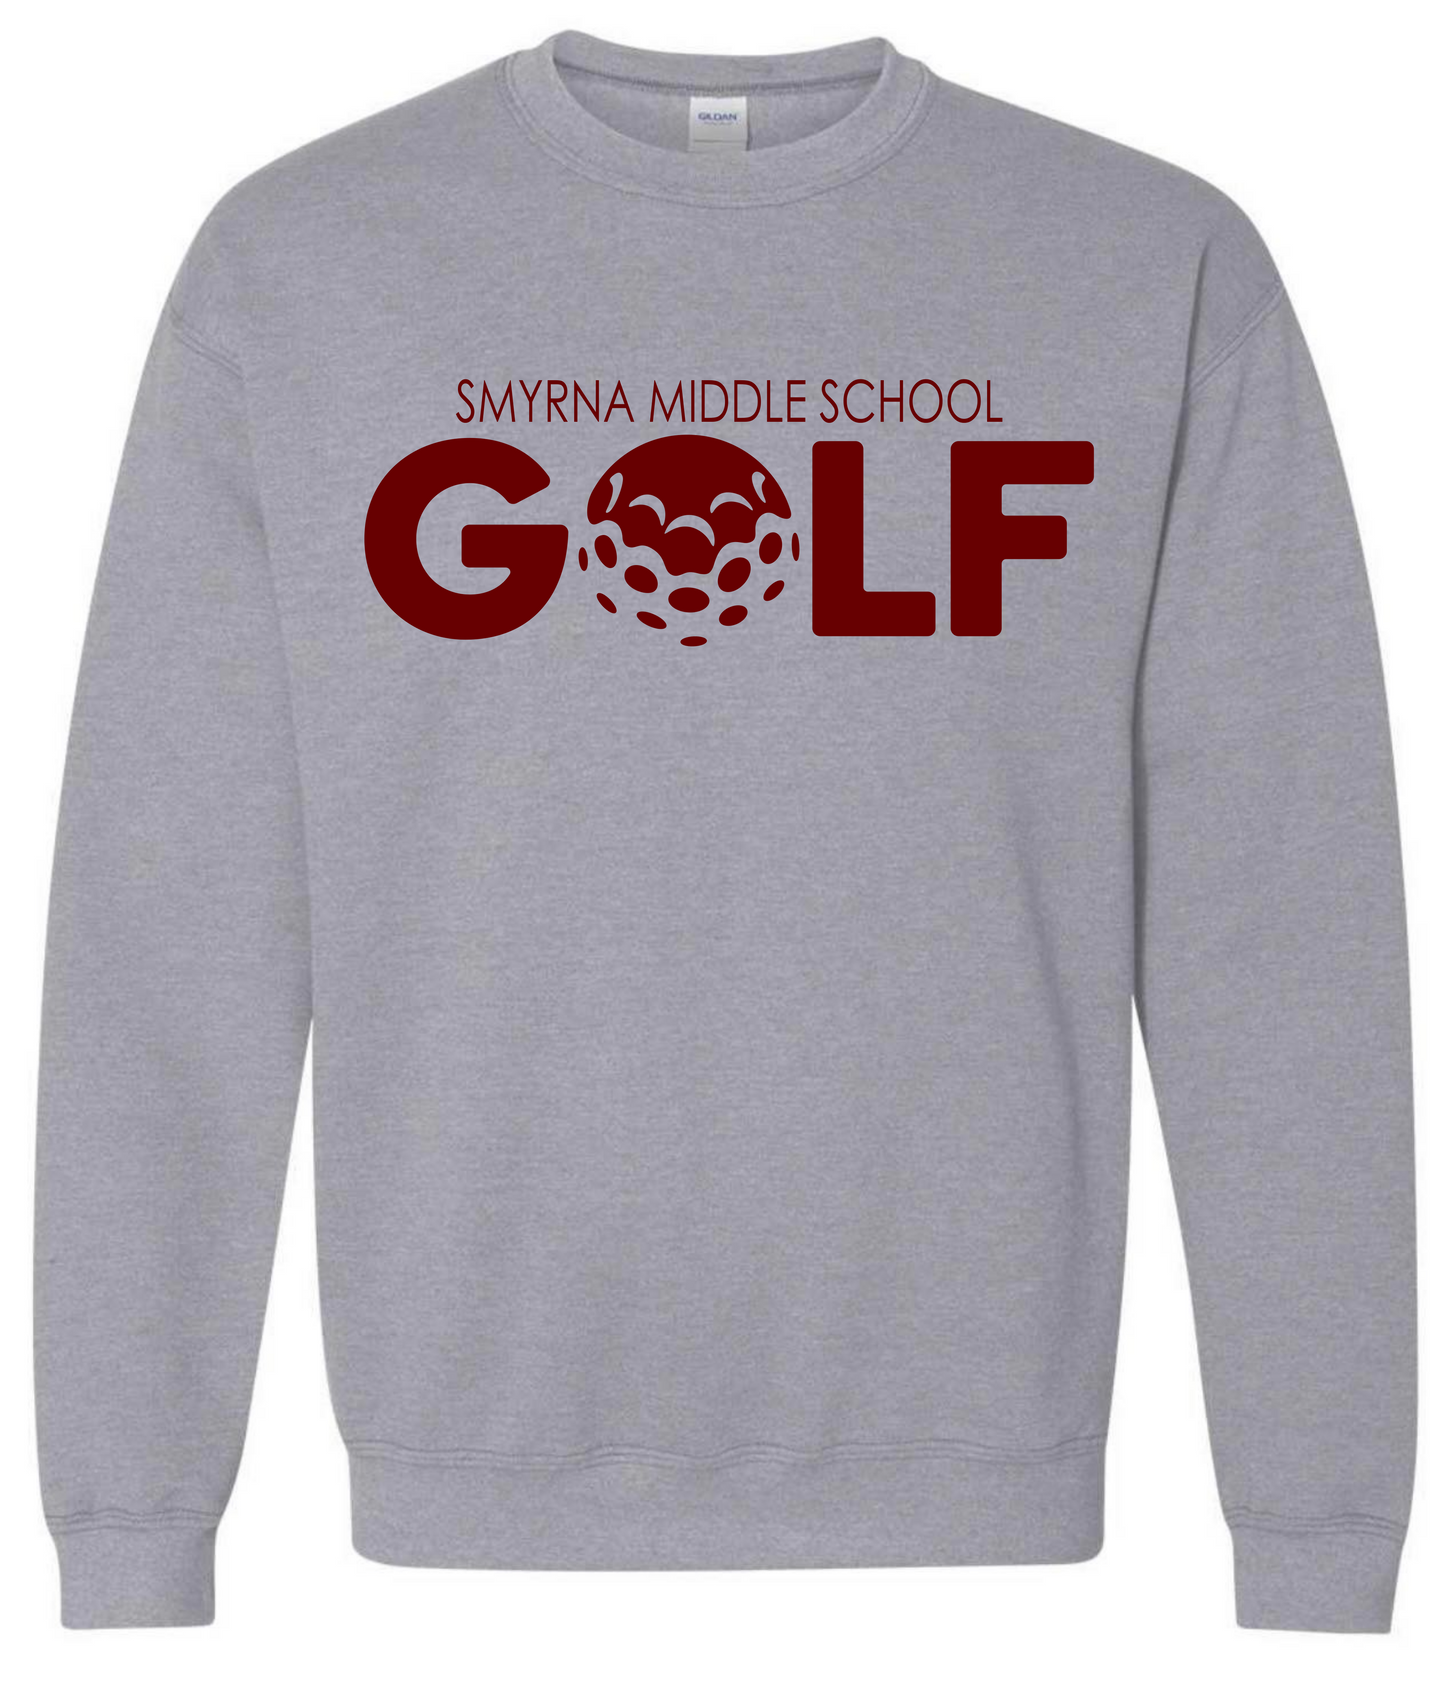 Smyrna Middle School Golf Sweatshirt